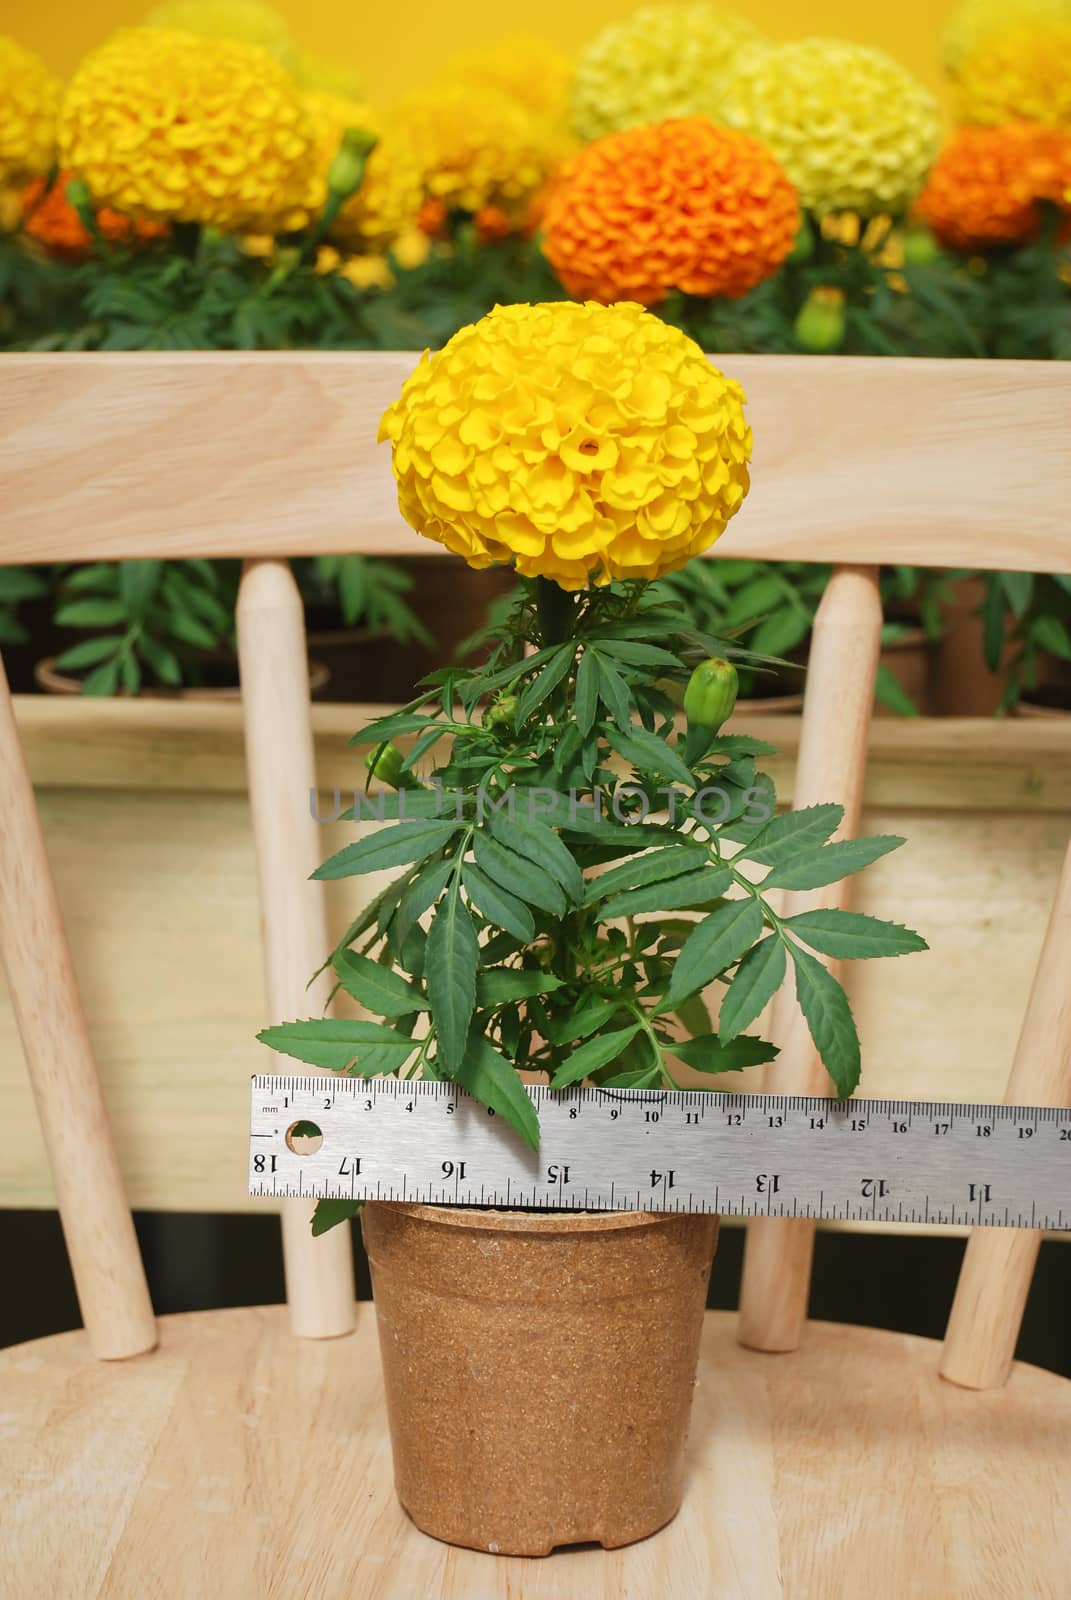 Marigolds Yellow Color (Tagetes erecta, Mexican marigold, Aztec marigold, African marigold), marigold pot plant  